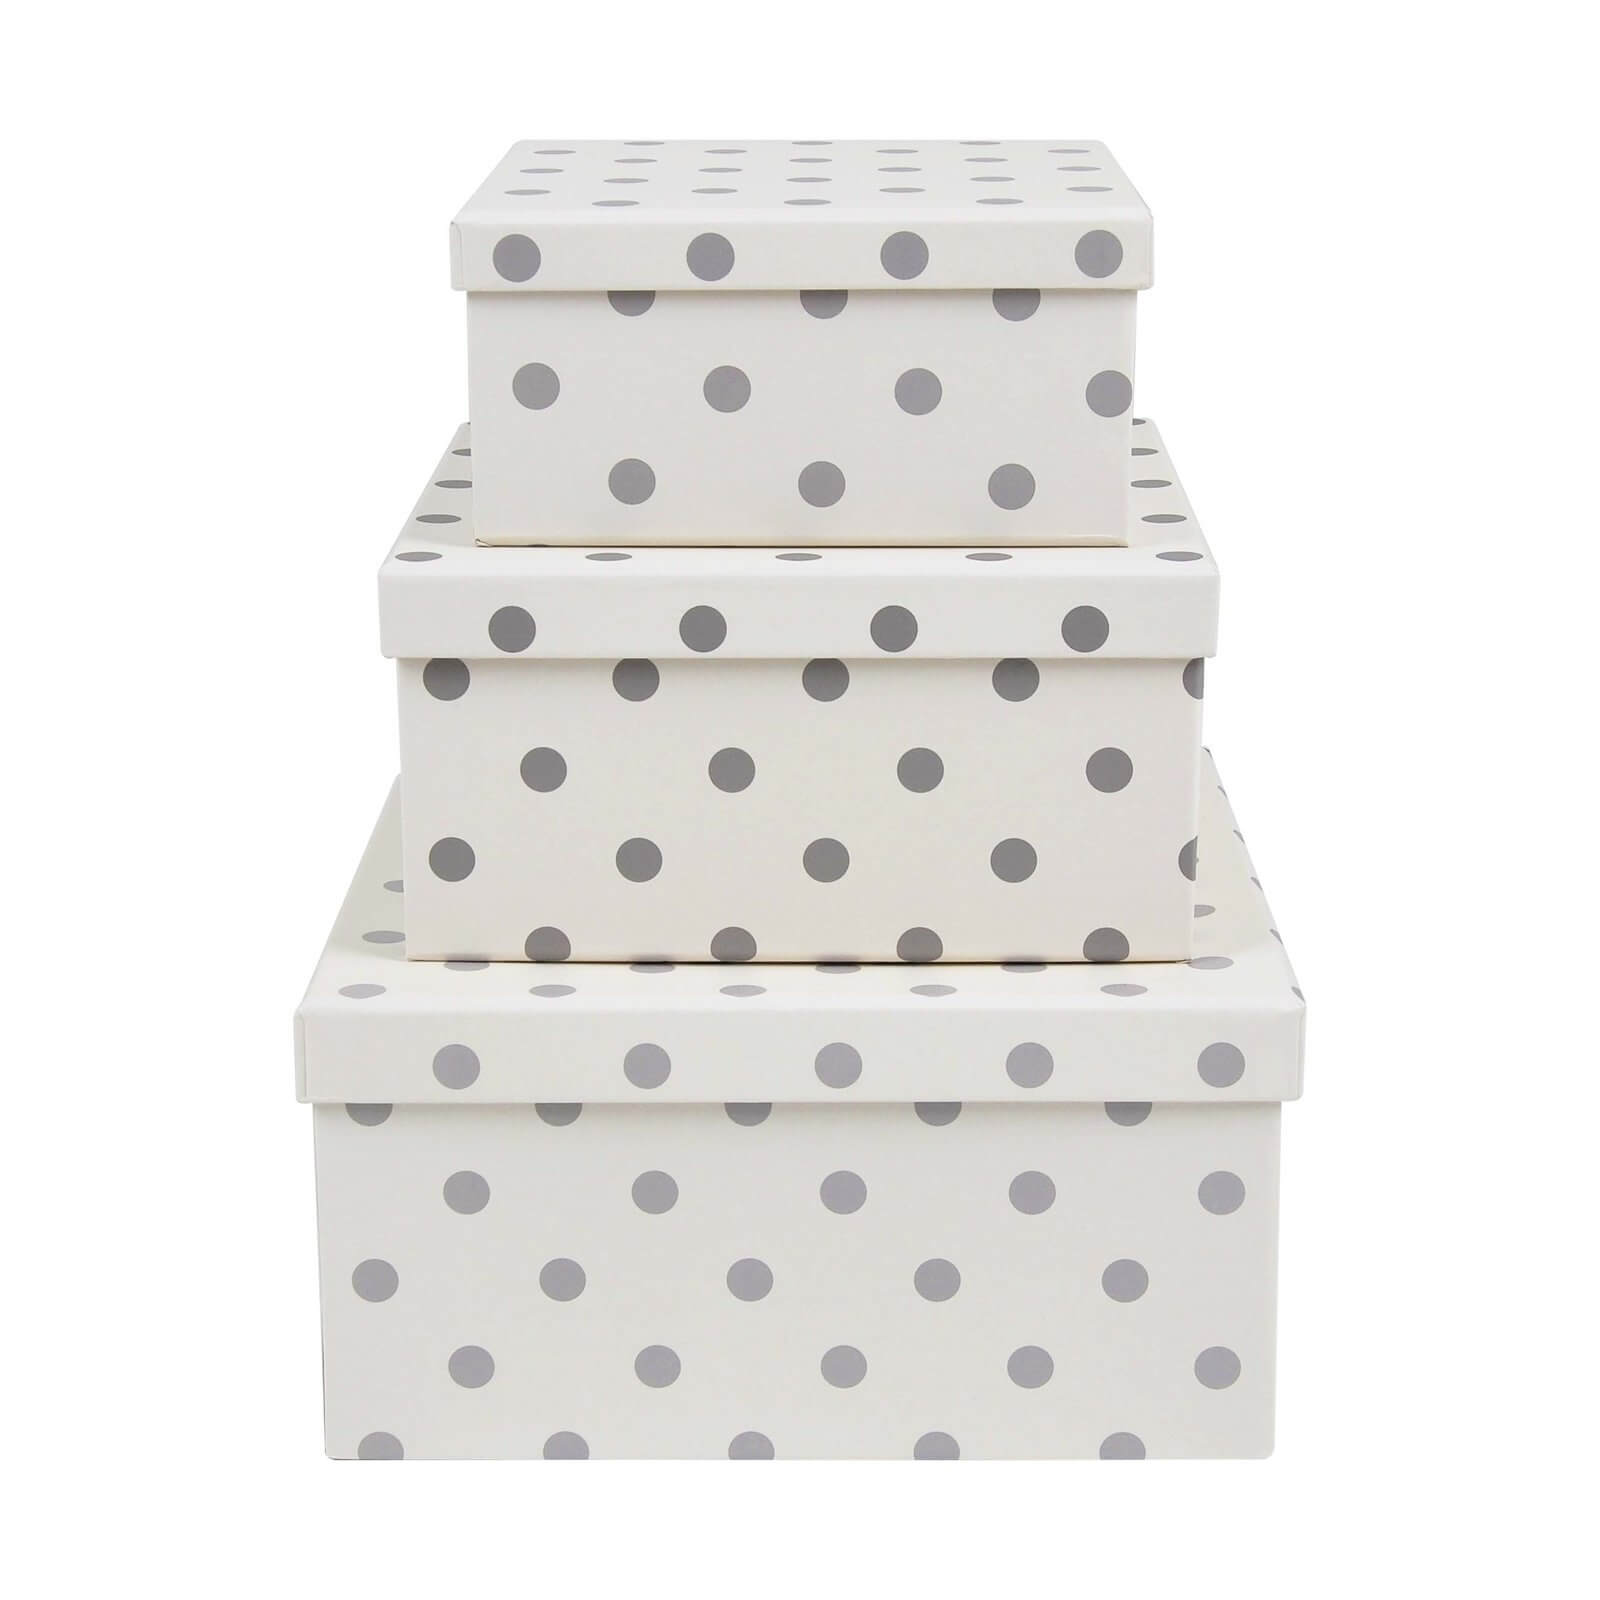 Spot Cardboard Storage Boxes - Set of 3